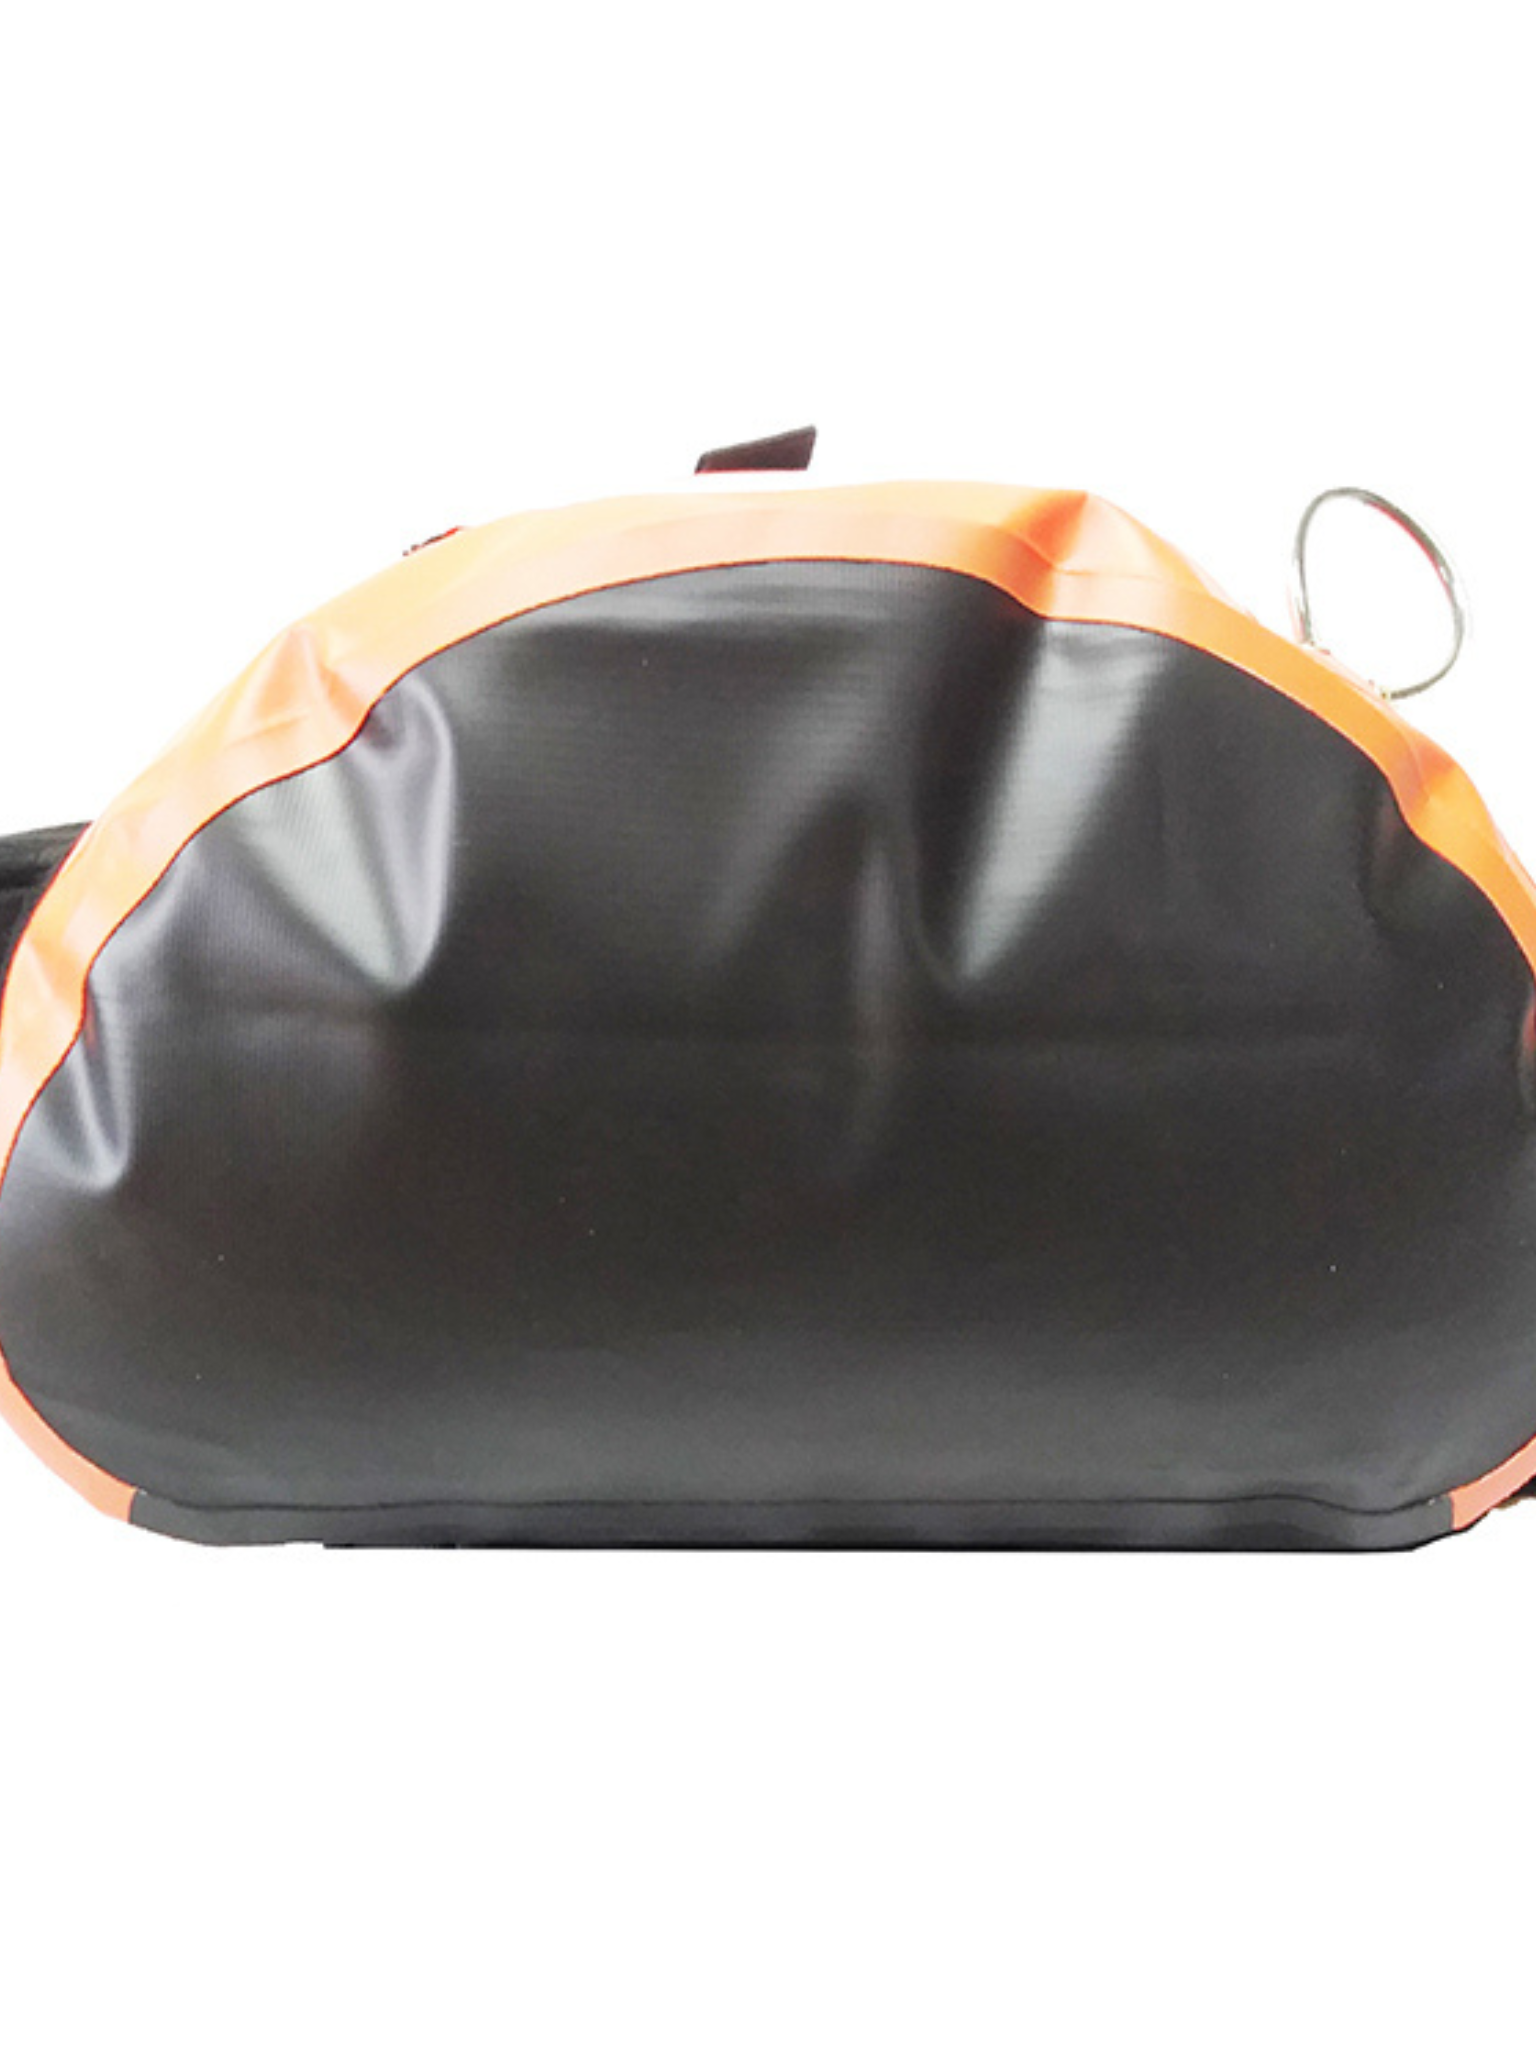 Caribou waterproof backpack     45L - flame orange